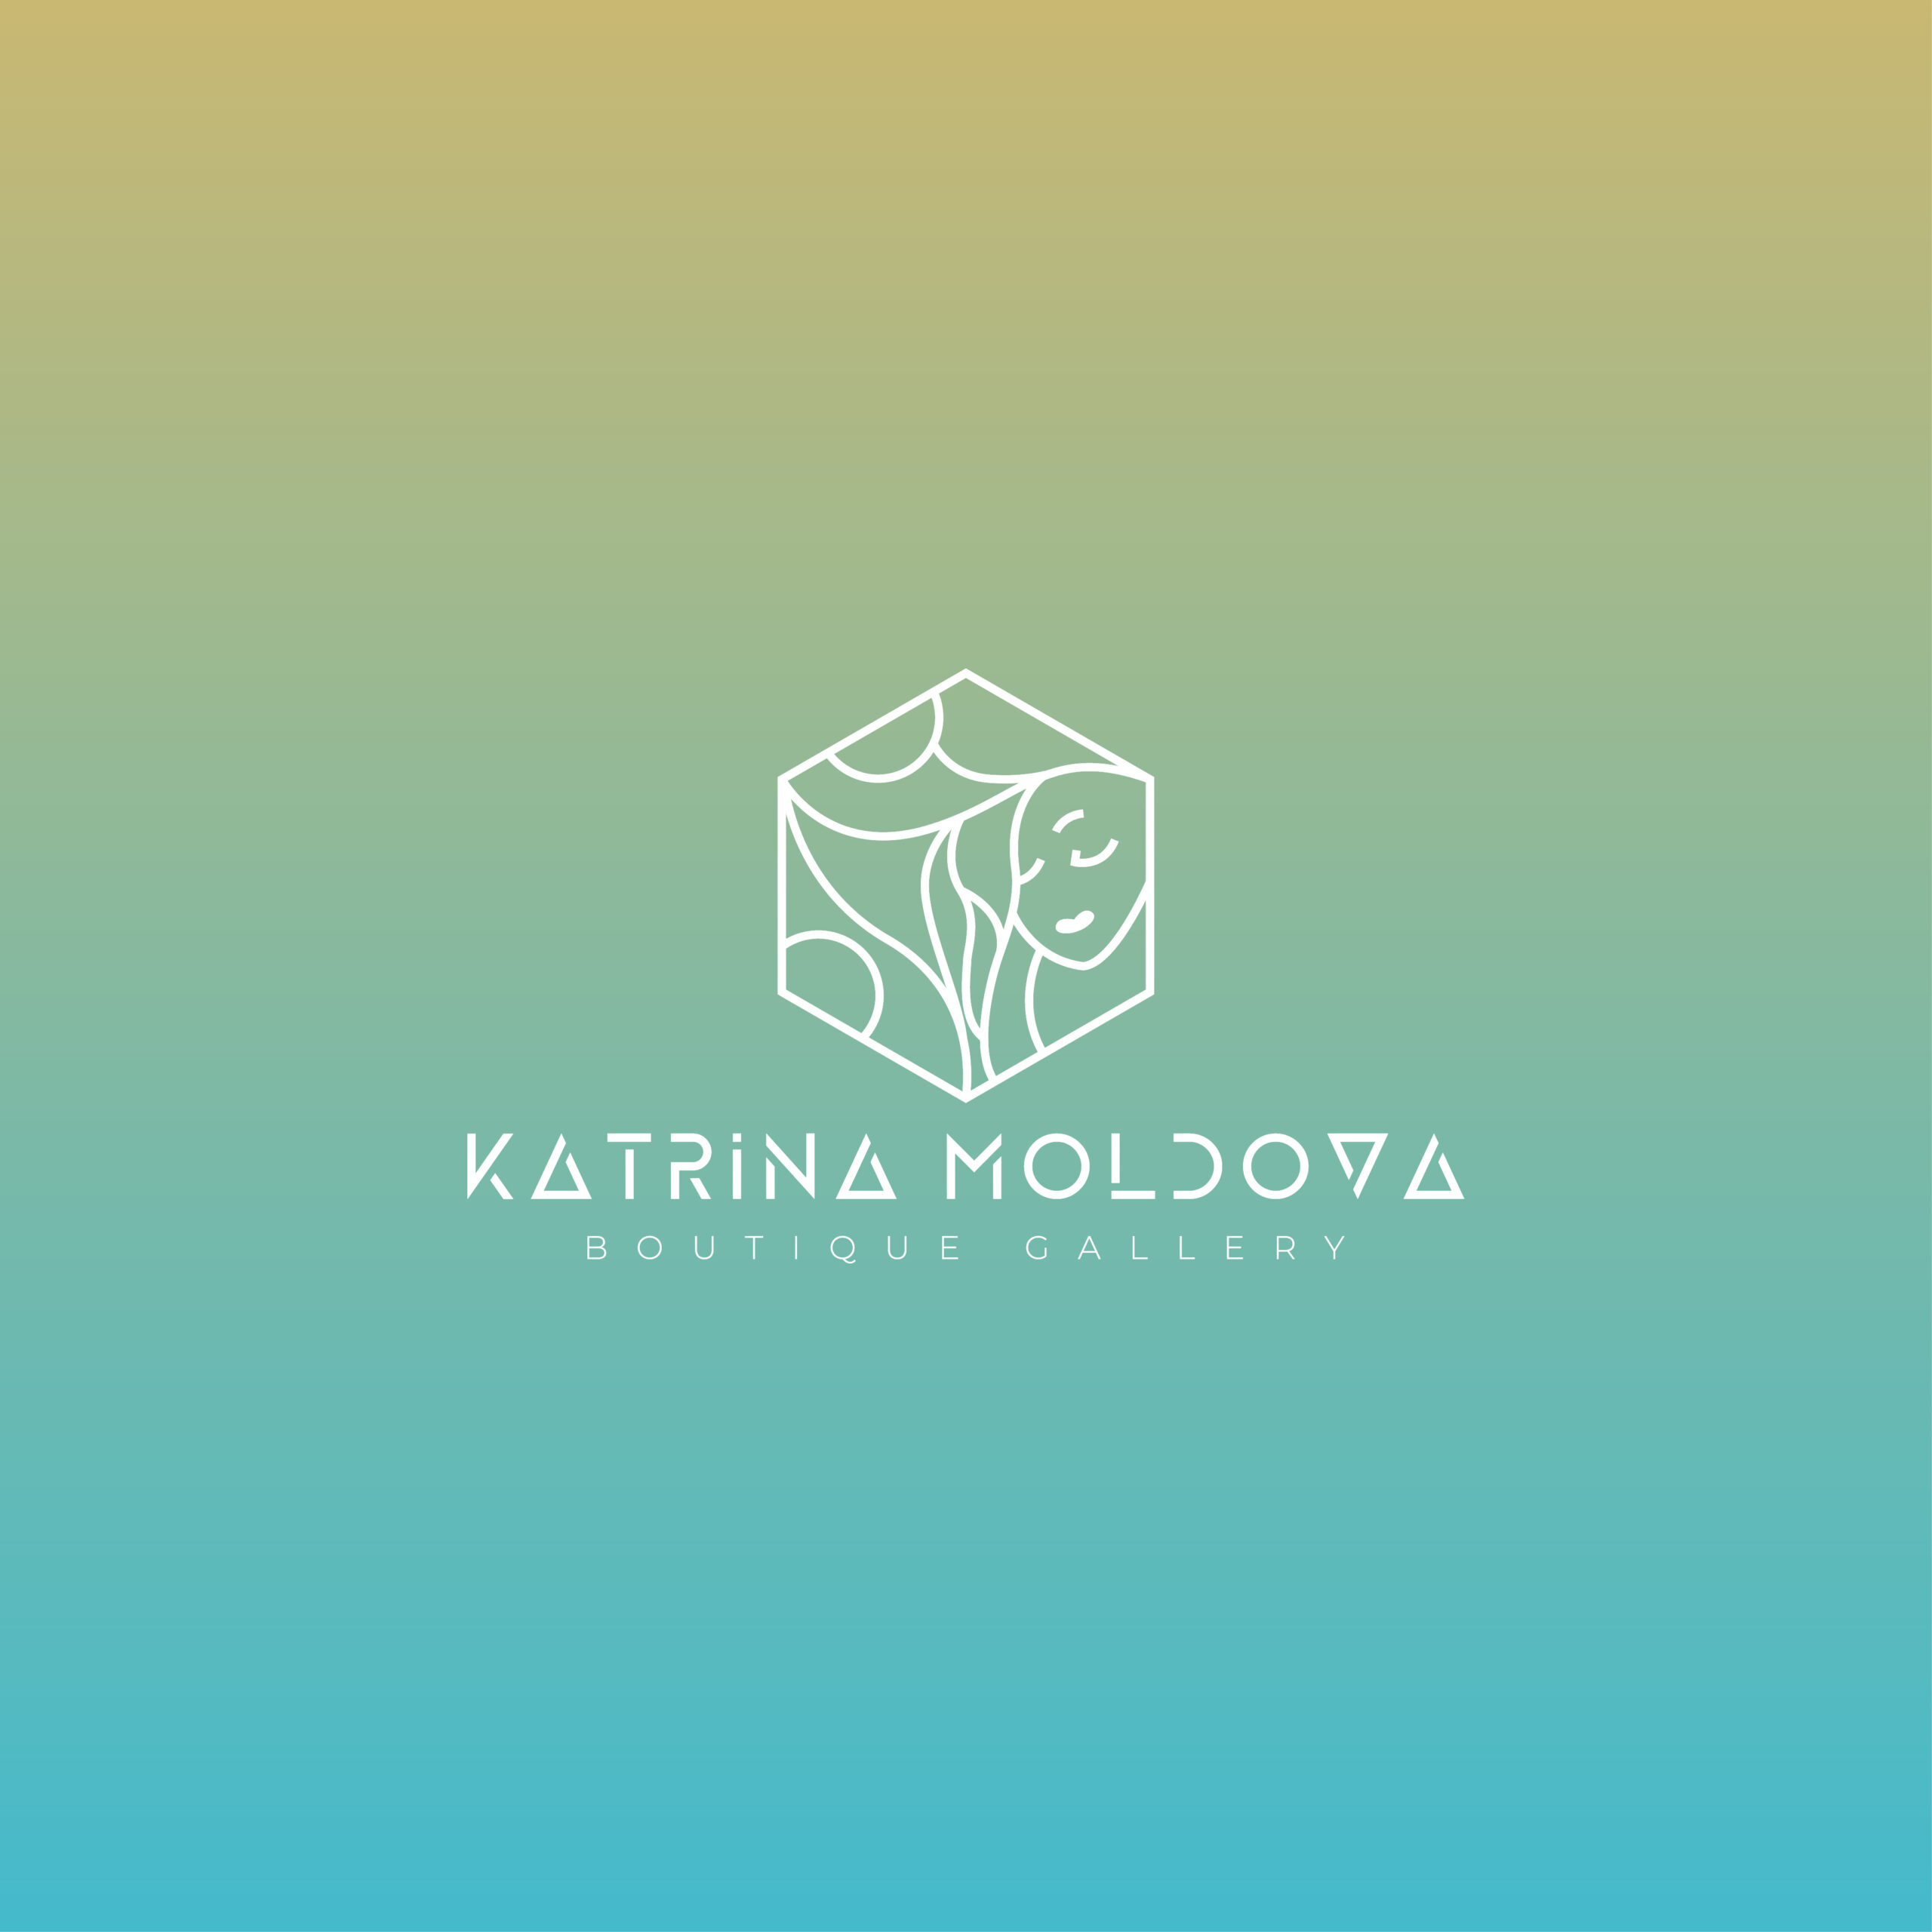 katrina moldova boutique gallery boca raton florida grozina marketing and public relations logo design